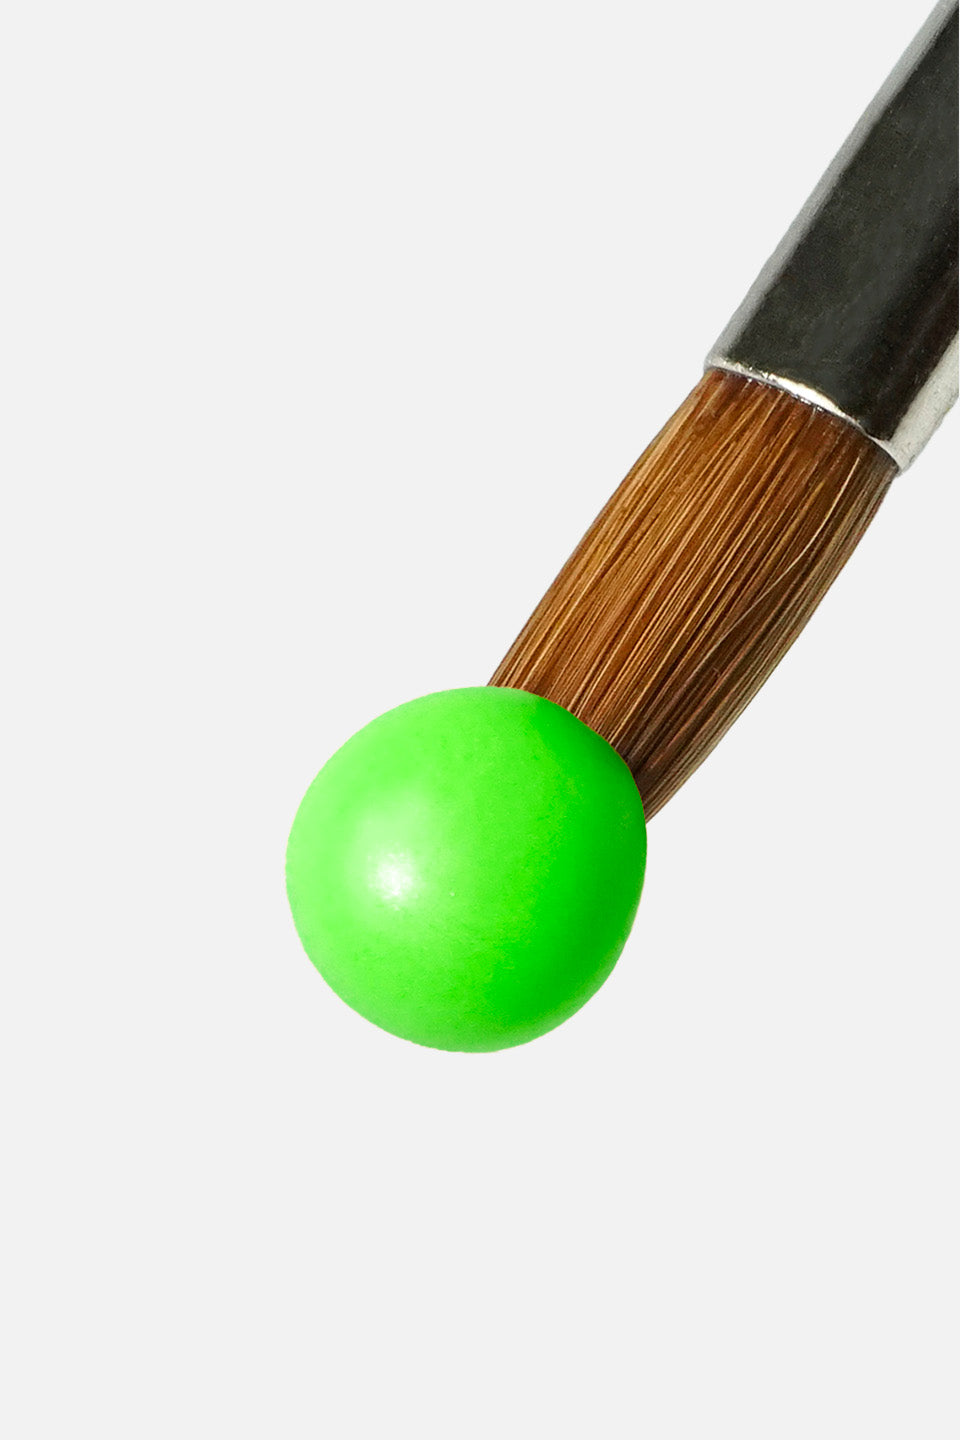 Polvo acrílico verde neon 5 g